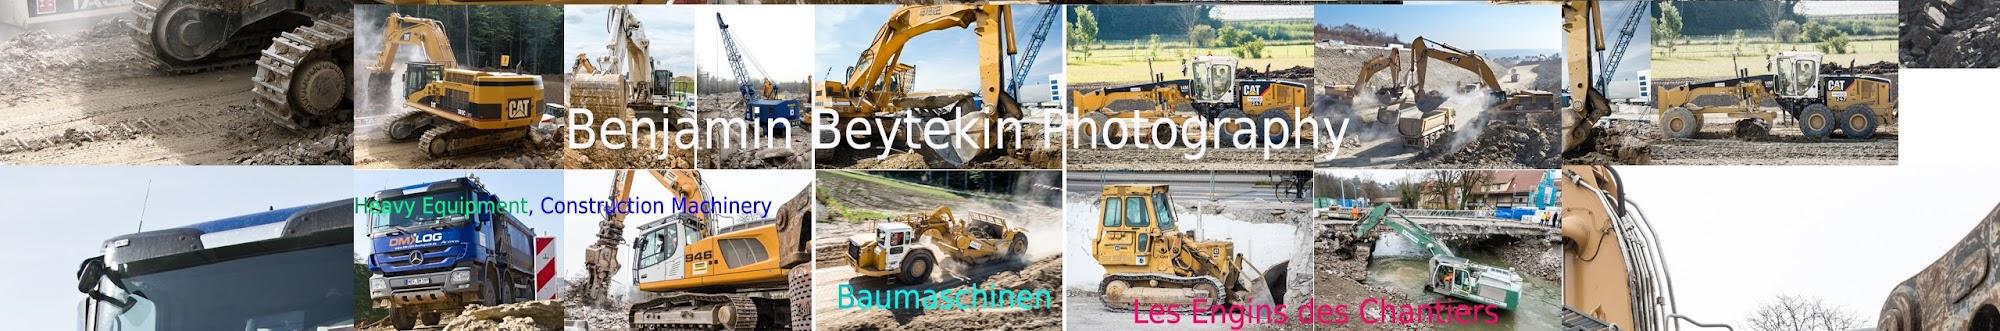 Benjamin Beytekin - Construction Machinery & More